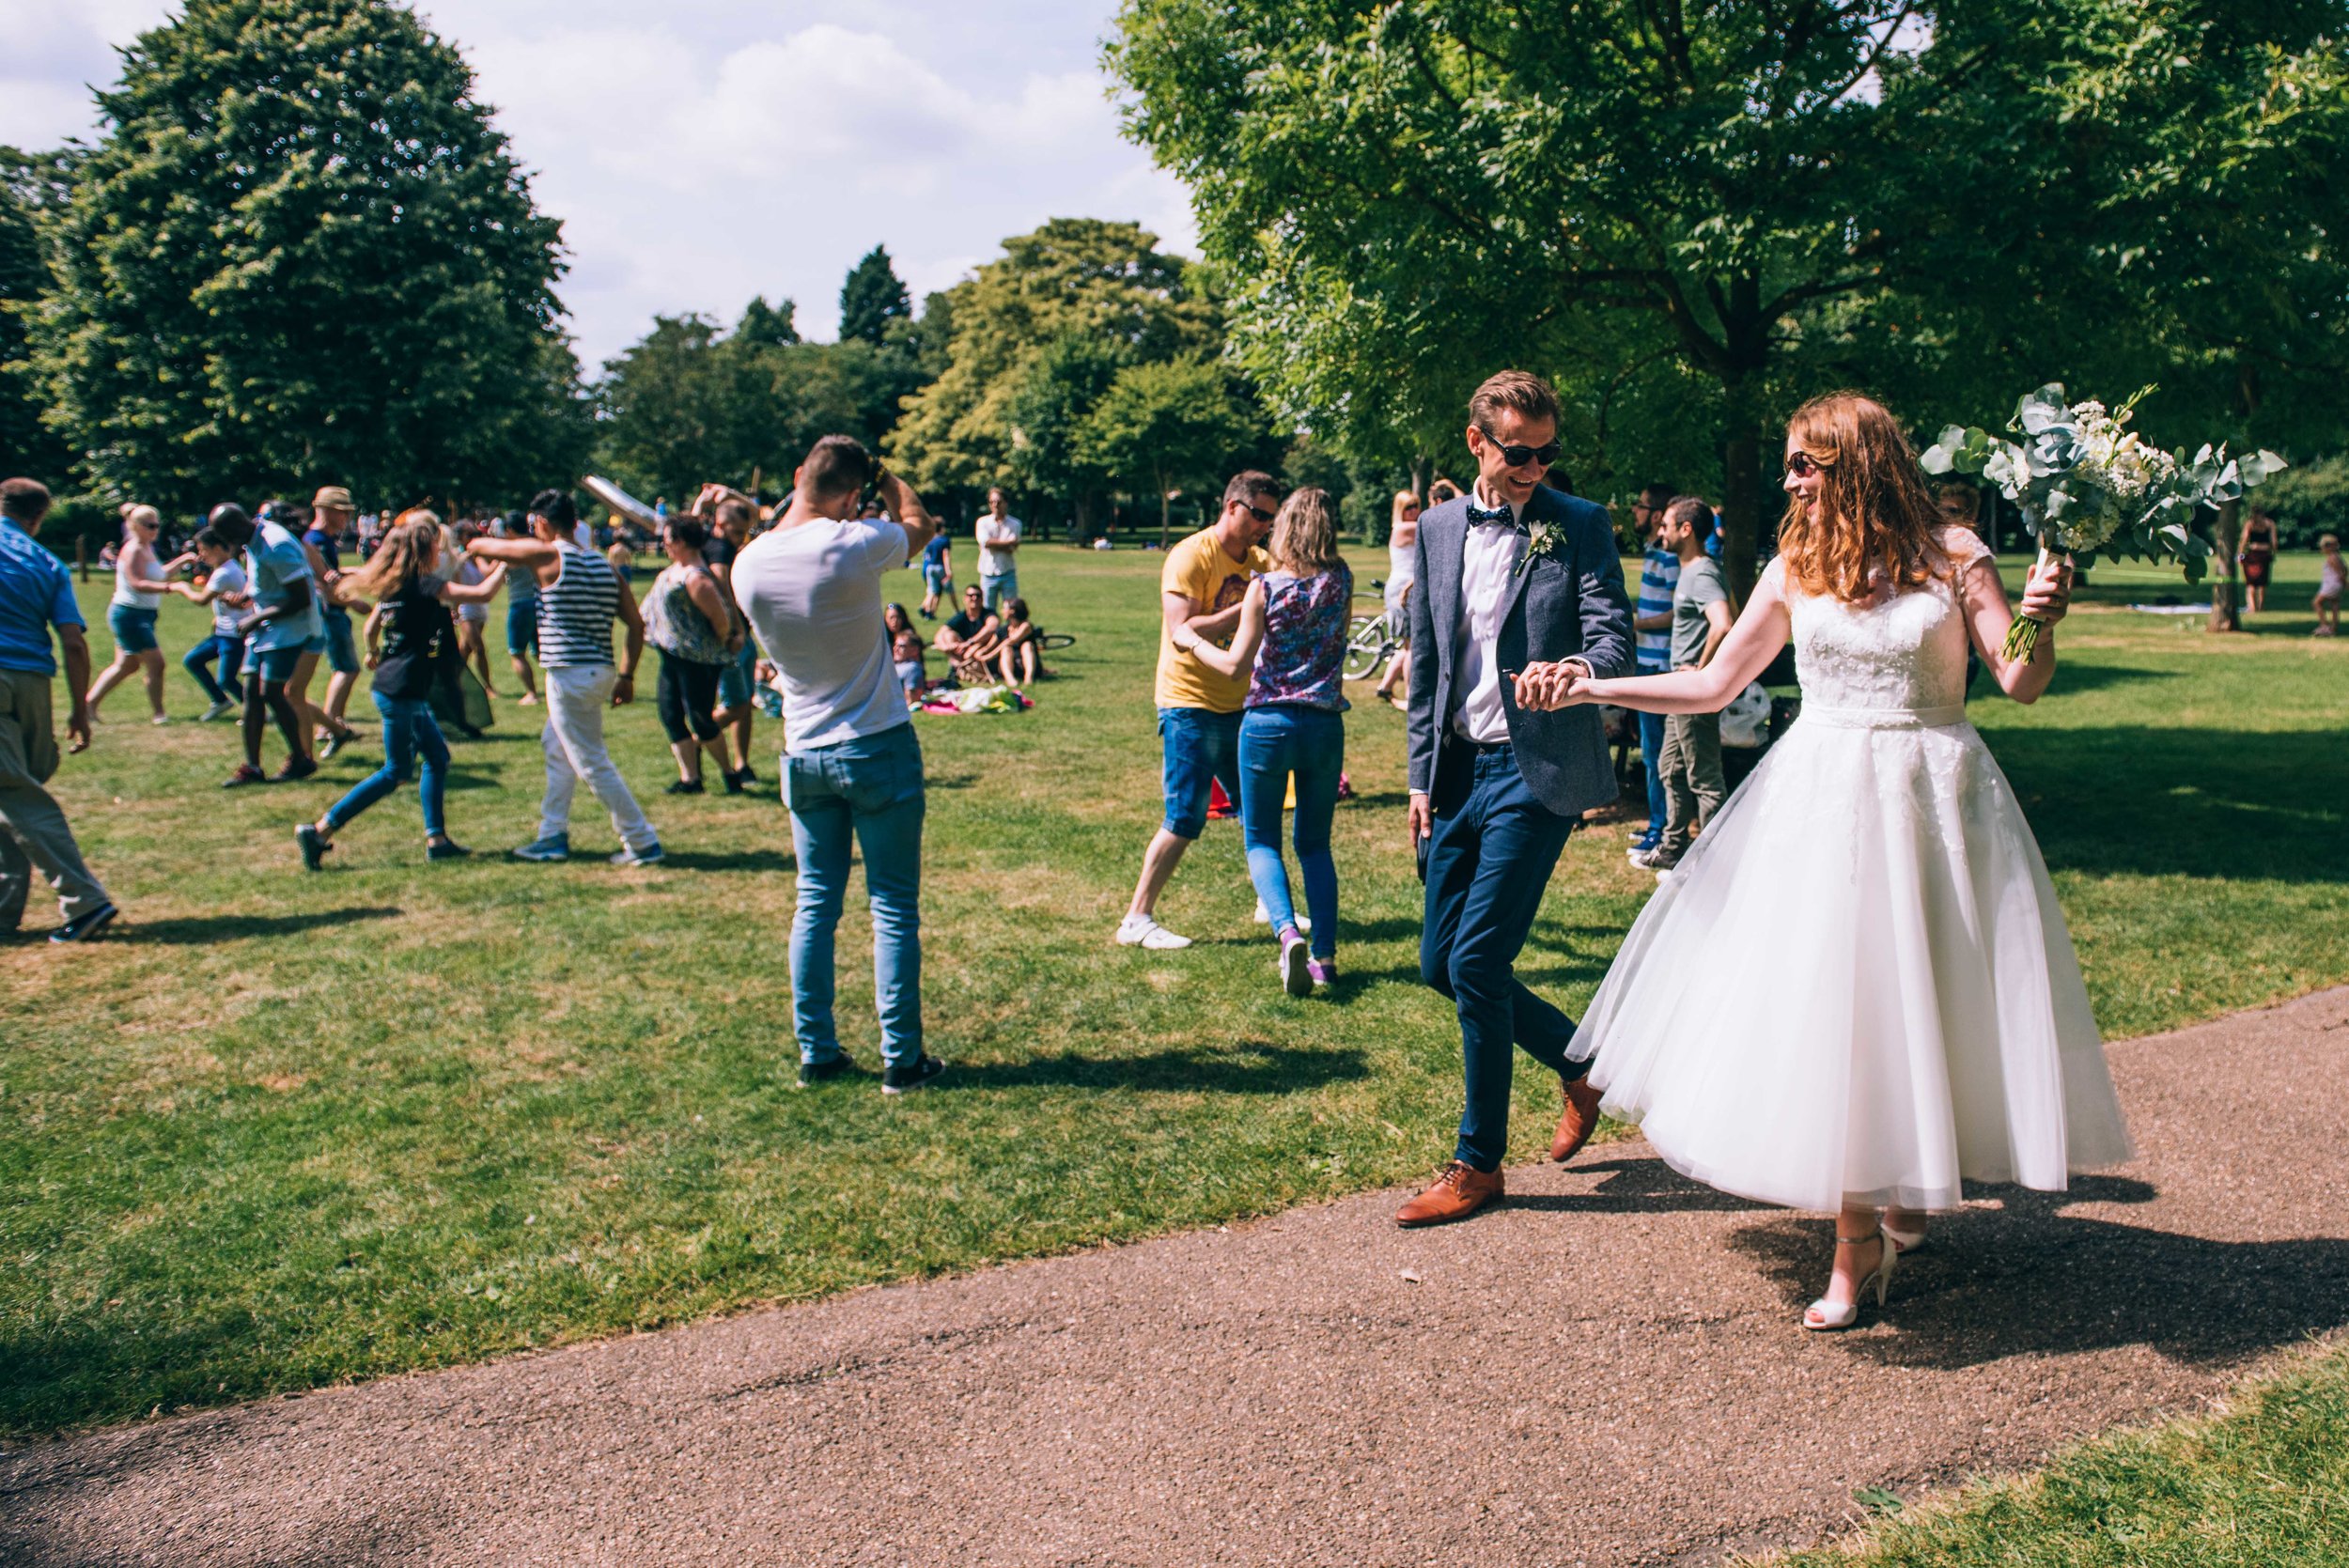 West Bridgford Park, Nottingham. Chris &amp; Sarah dancing in the park. Coales Capture Wedding Photography